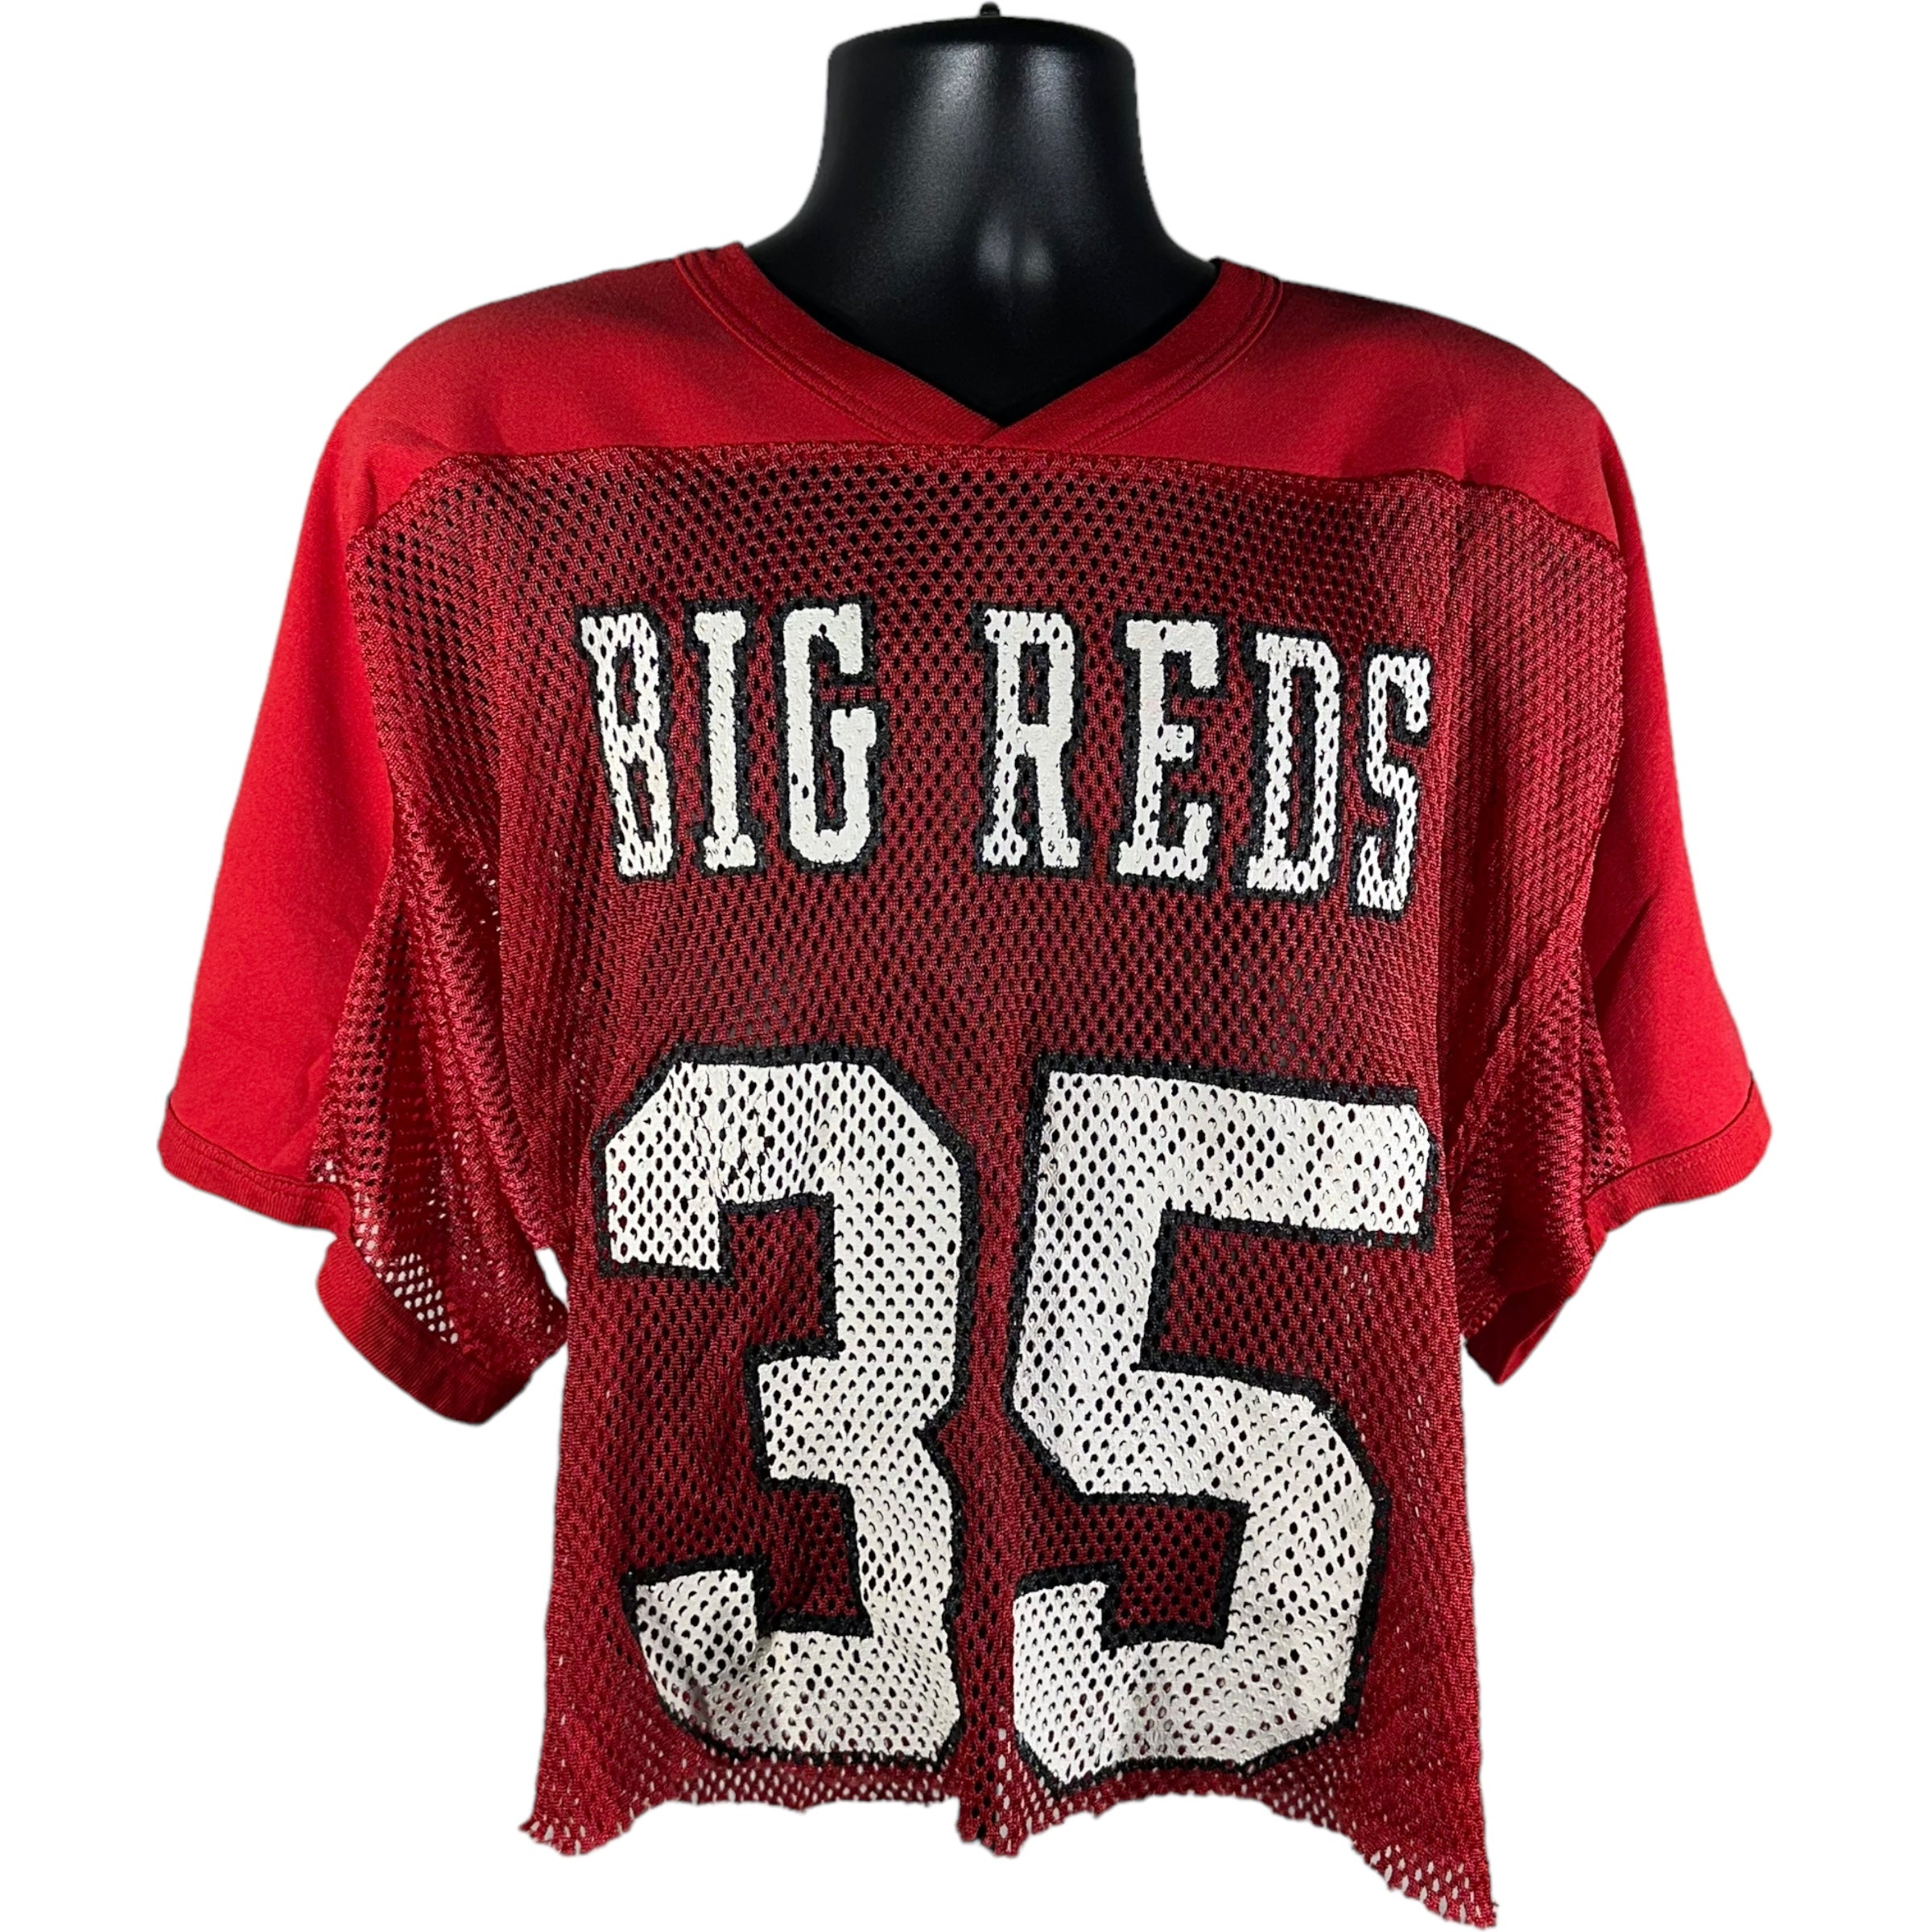 Vintage Big Reds #35 Jersey